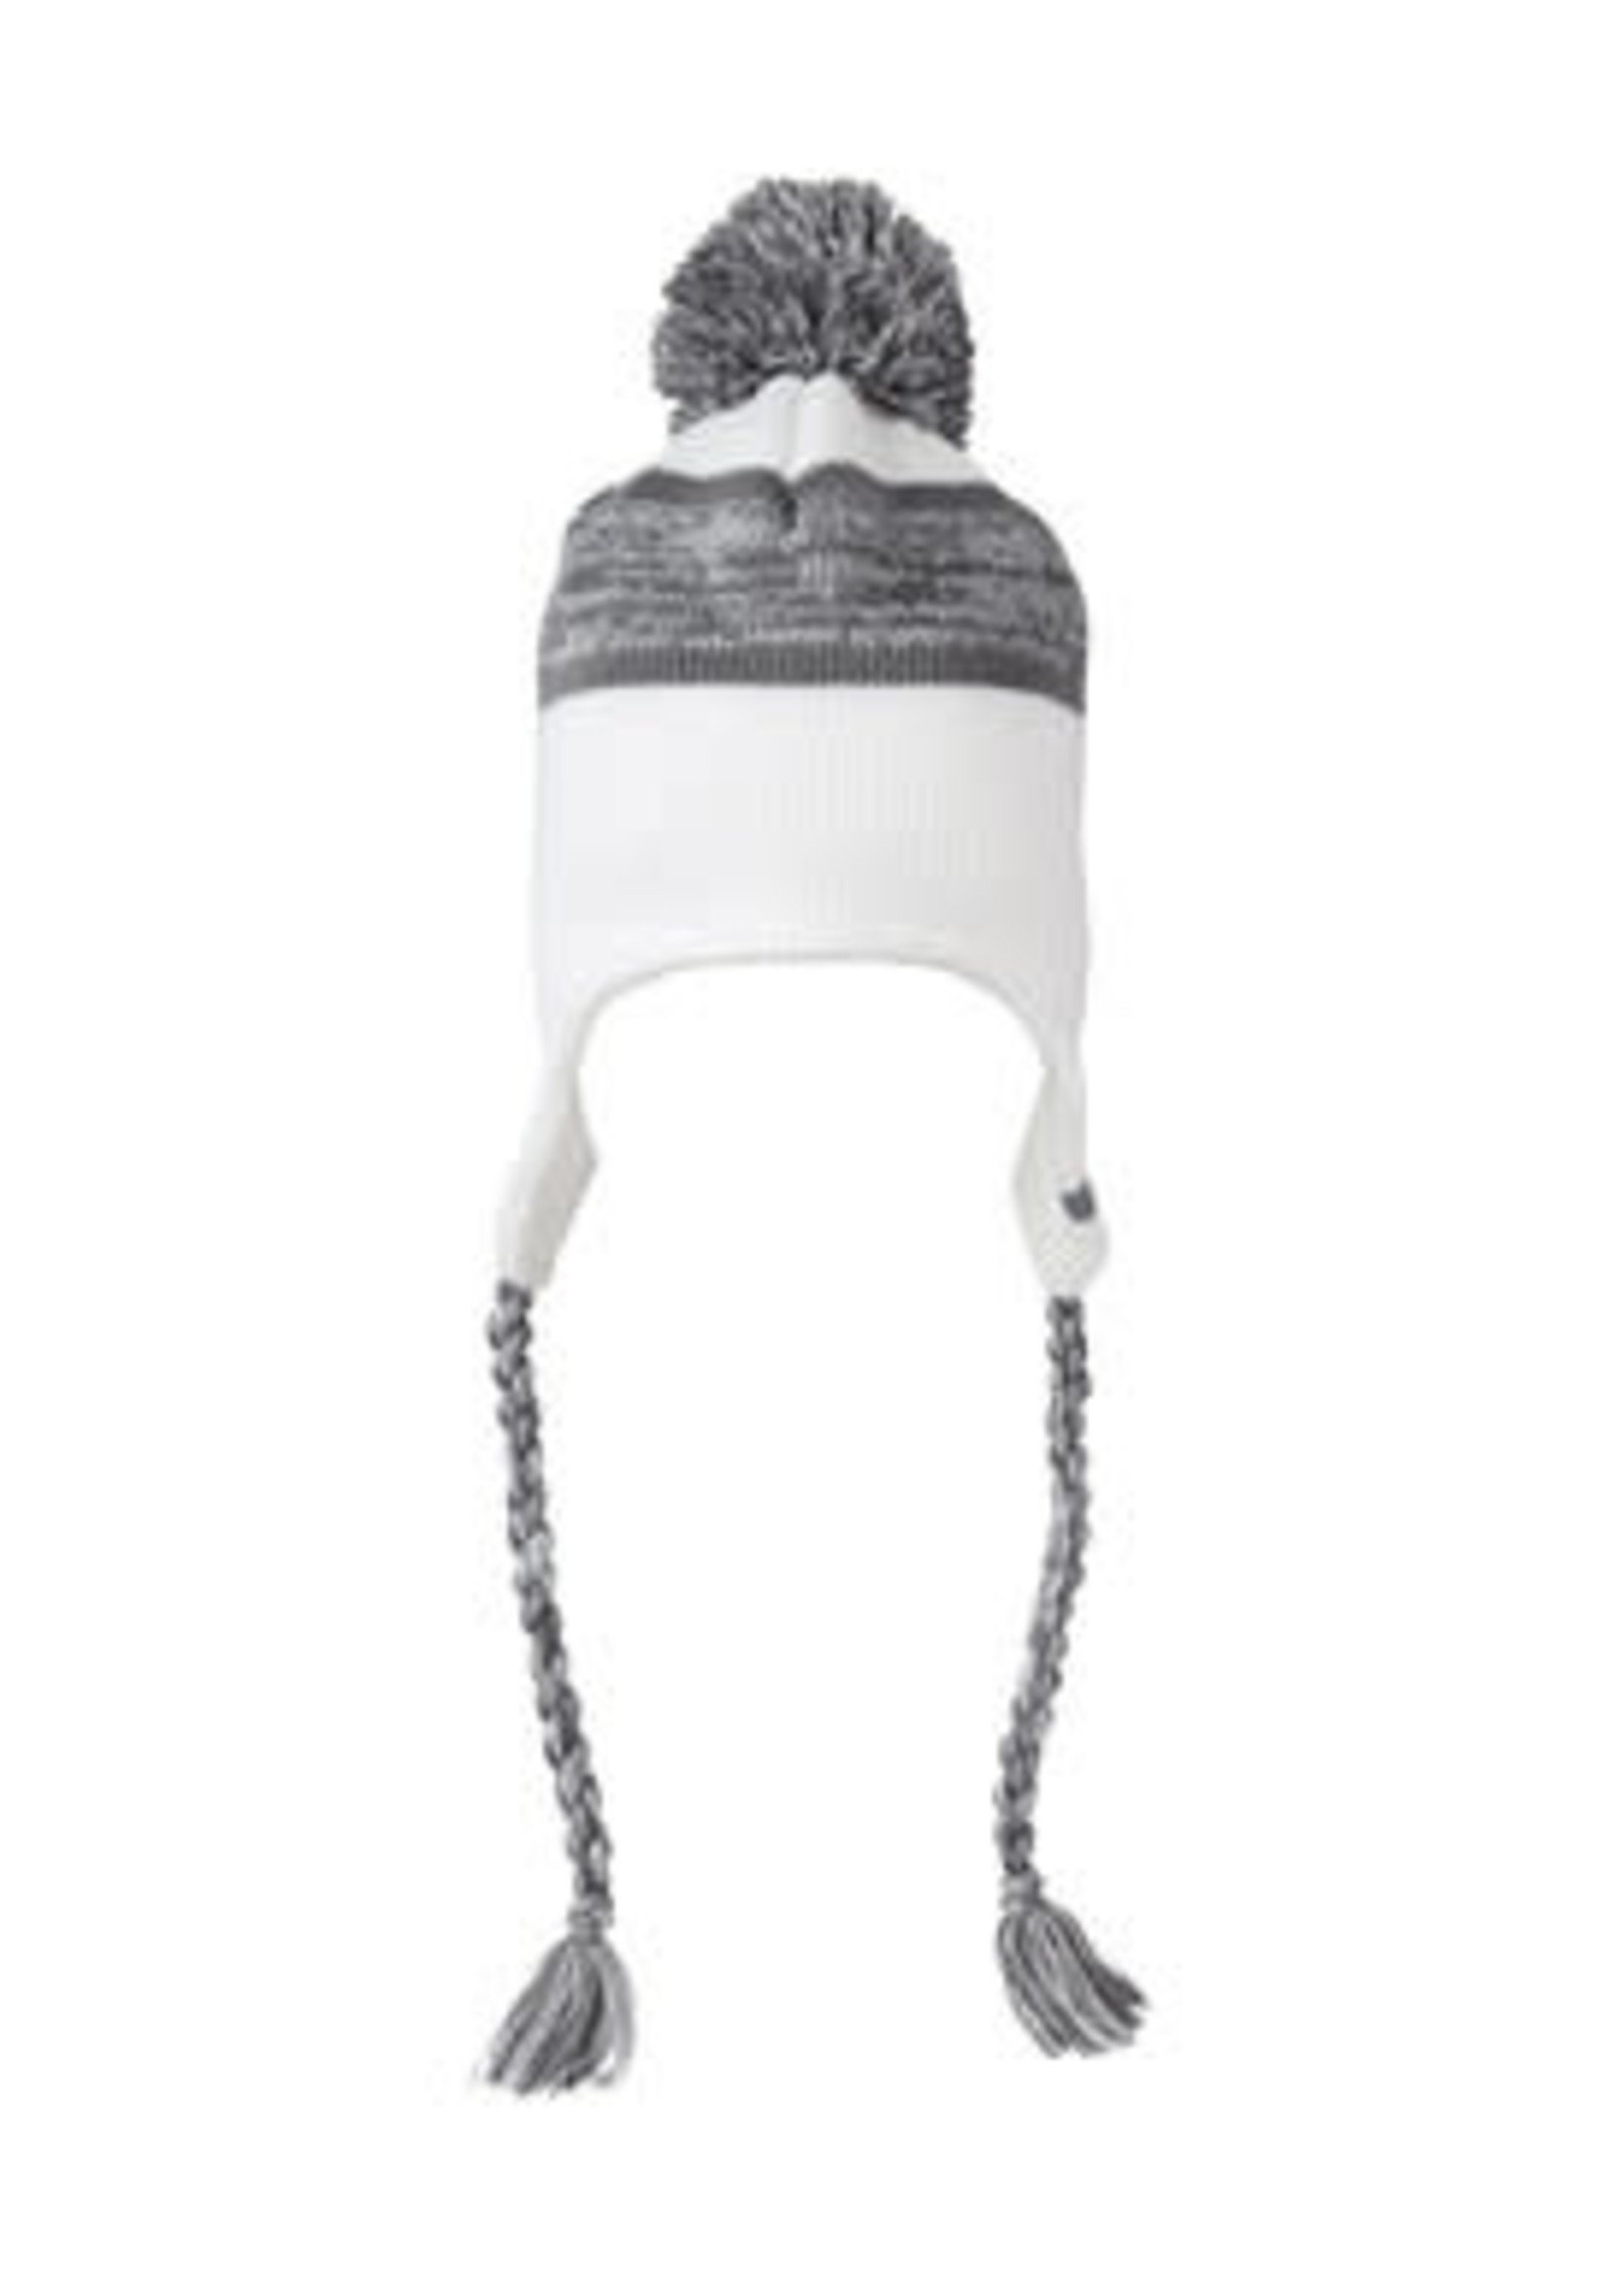 NON-UNIFORM Beanie - JD Backcountry Knit Pom Hat